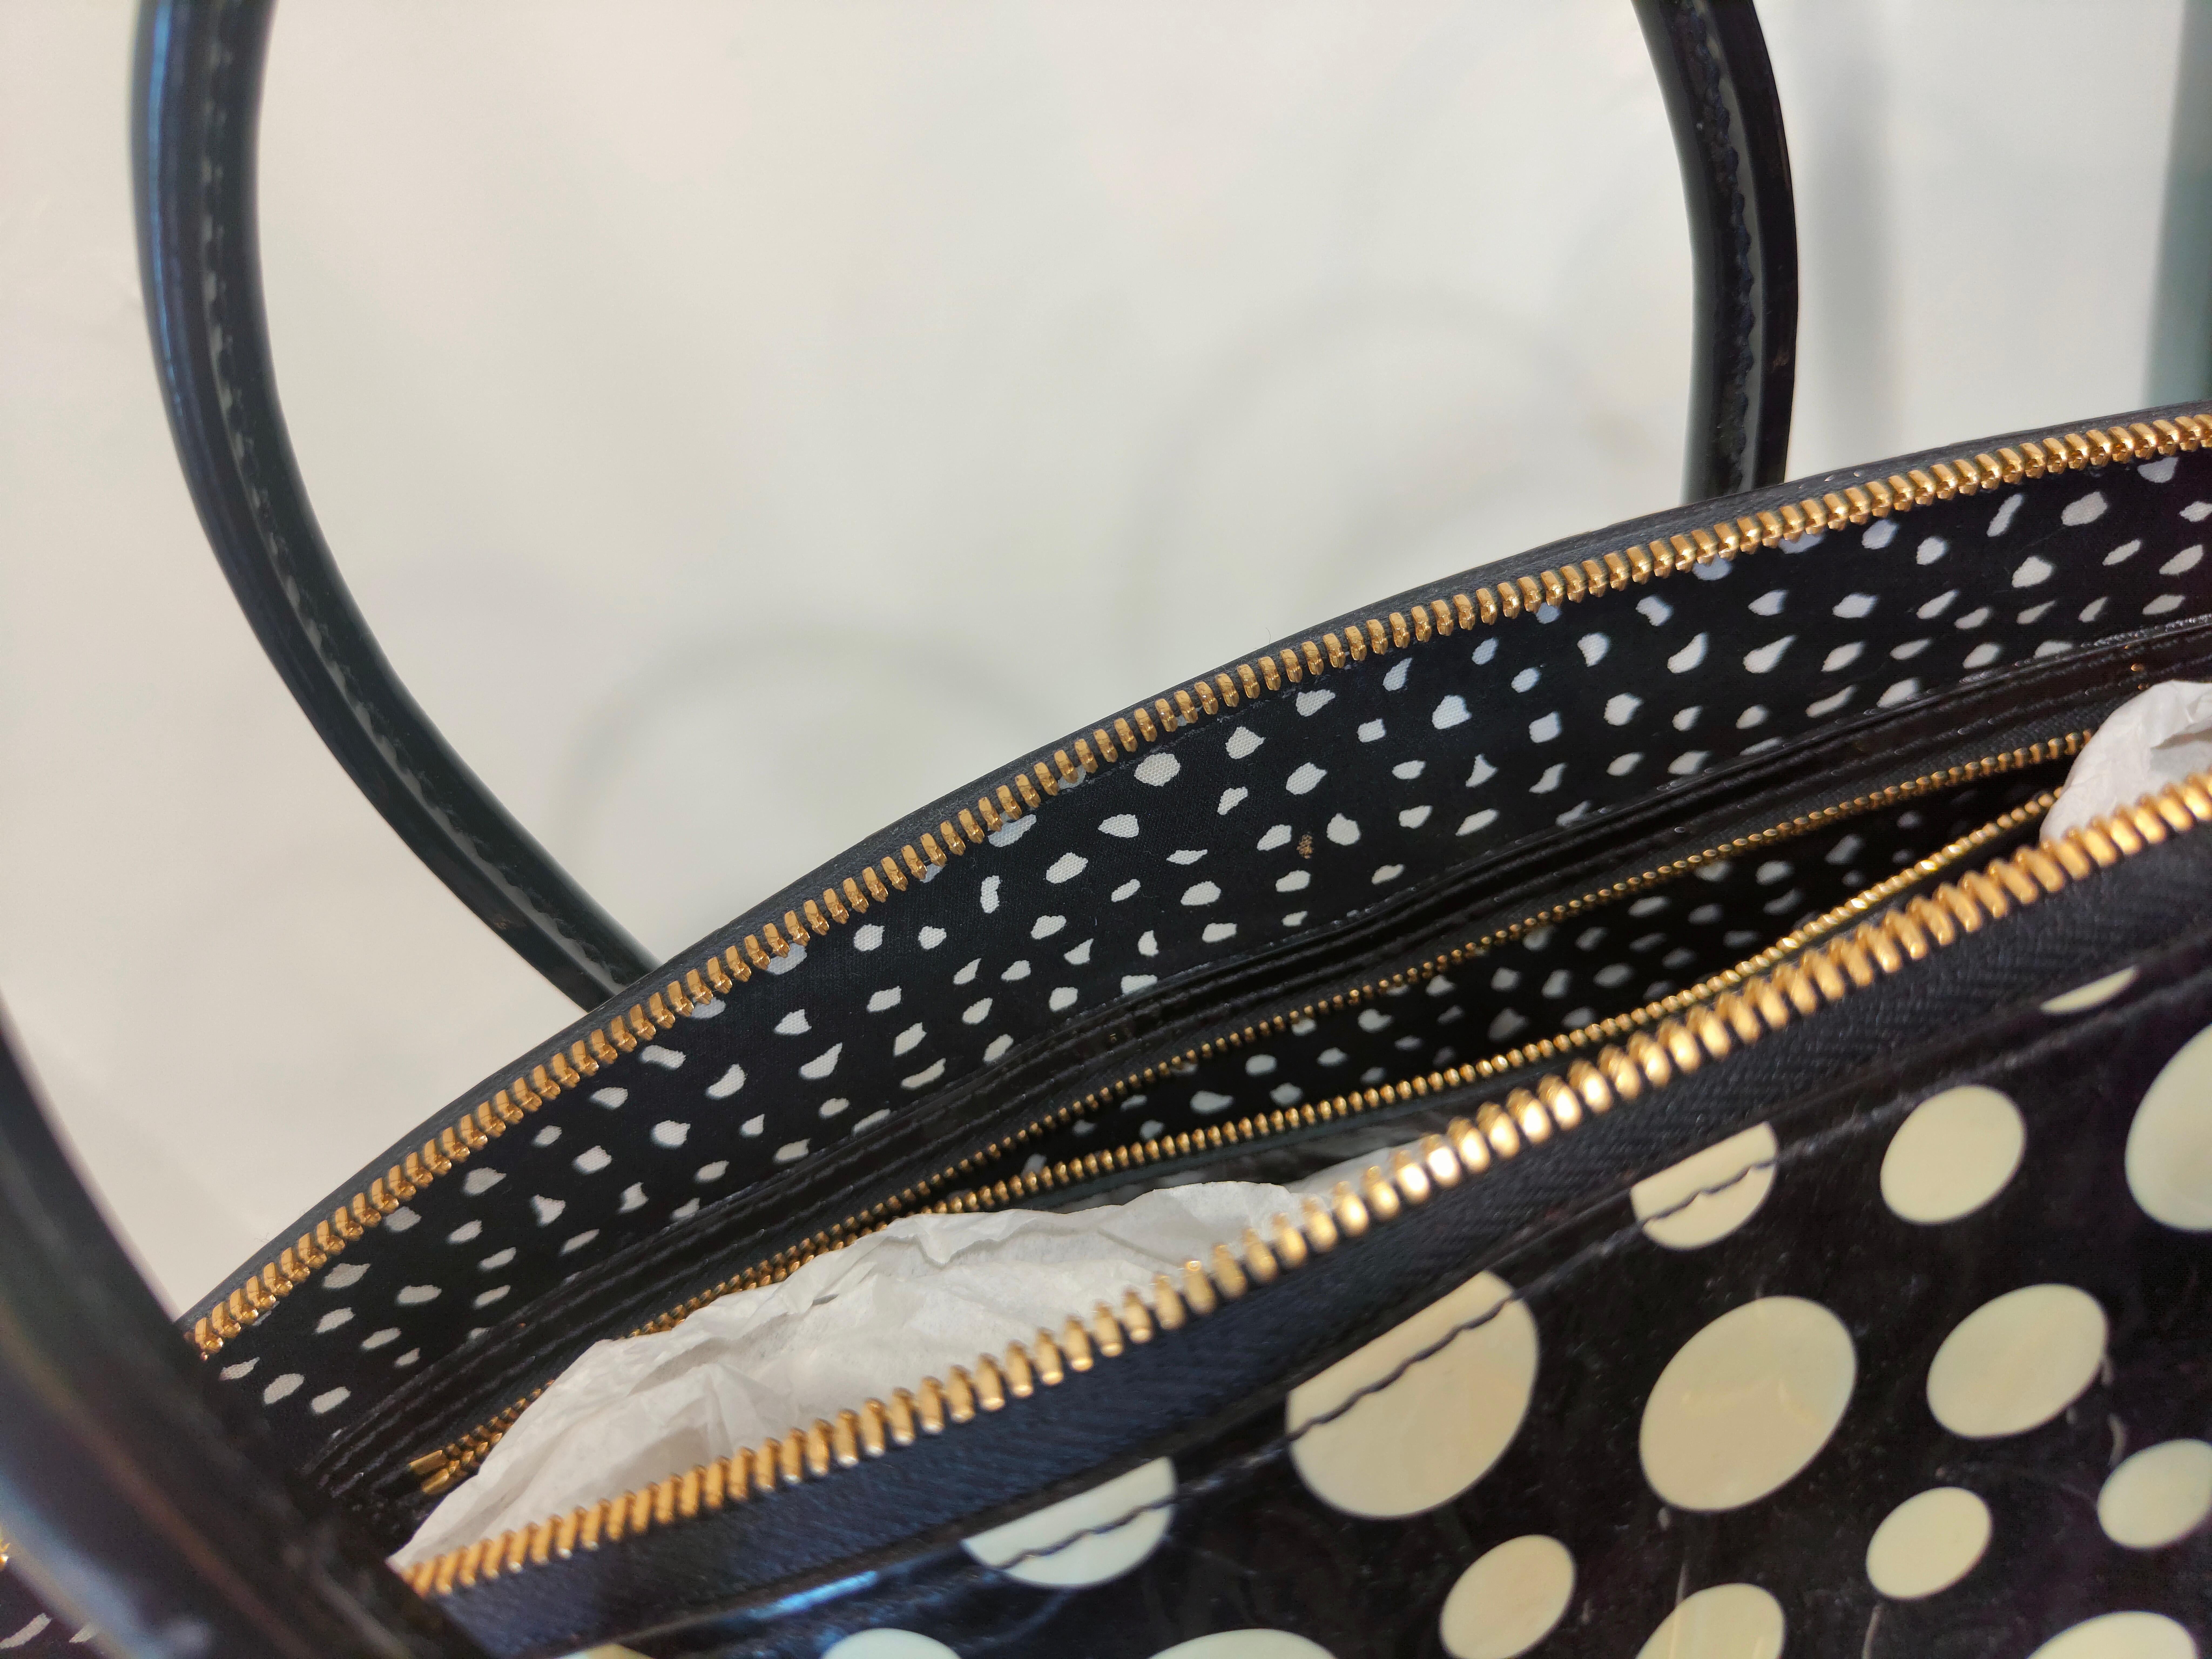 Louis Vuitton by Yayoi Kusama polkadot lock-it handlebag
Black and white patent leather handle bag
26*17*33 cm